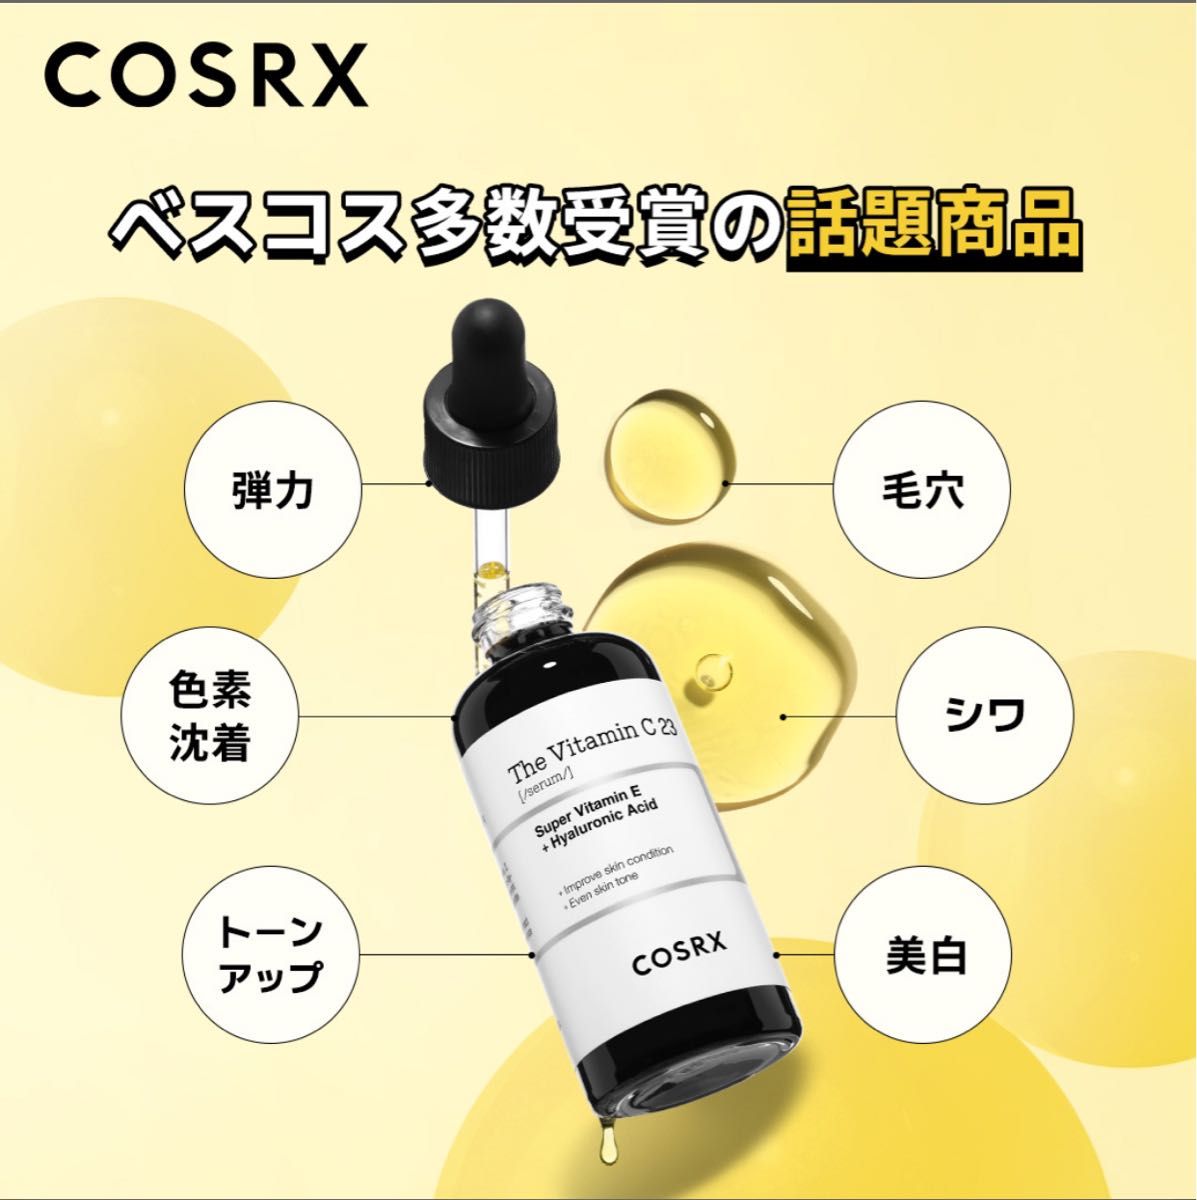 RX ザ・ビタミンC23セラム(20g)」純粋ビタミンC美容液 